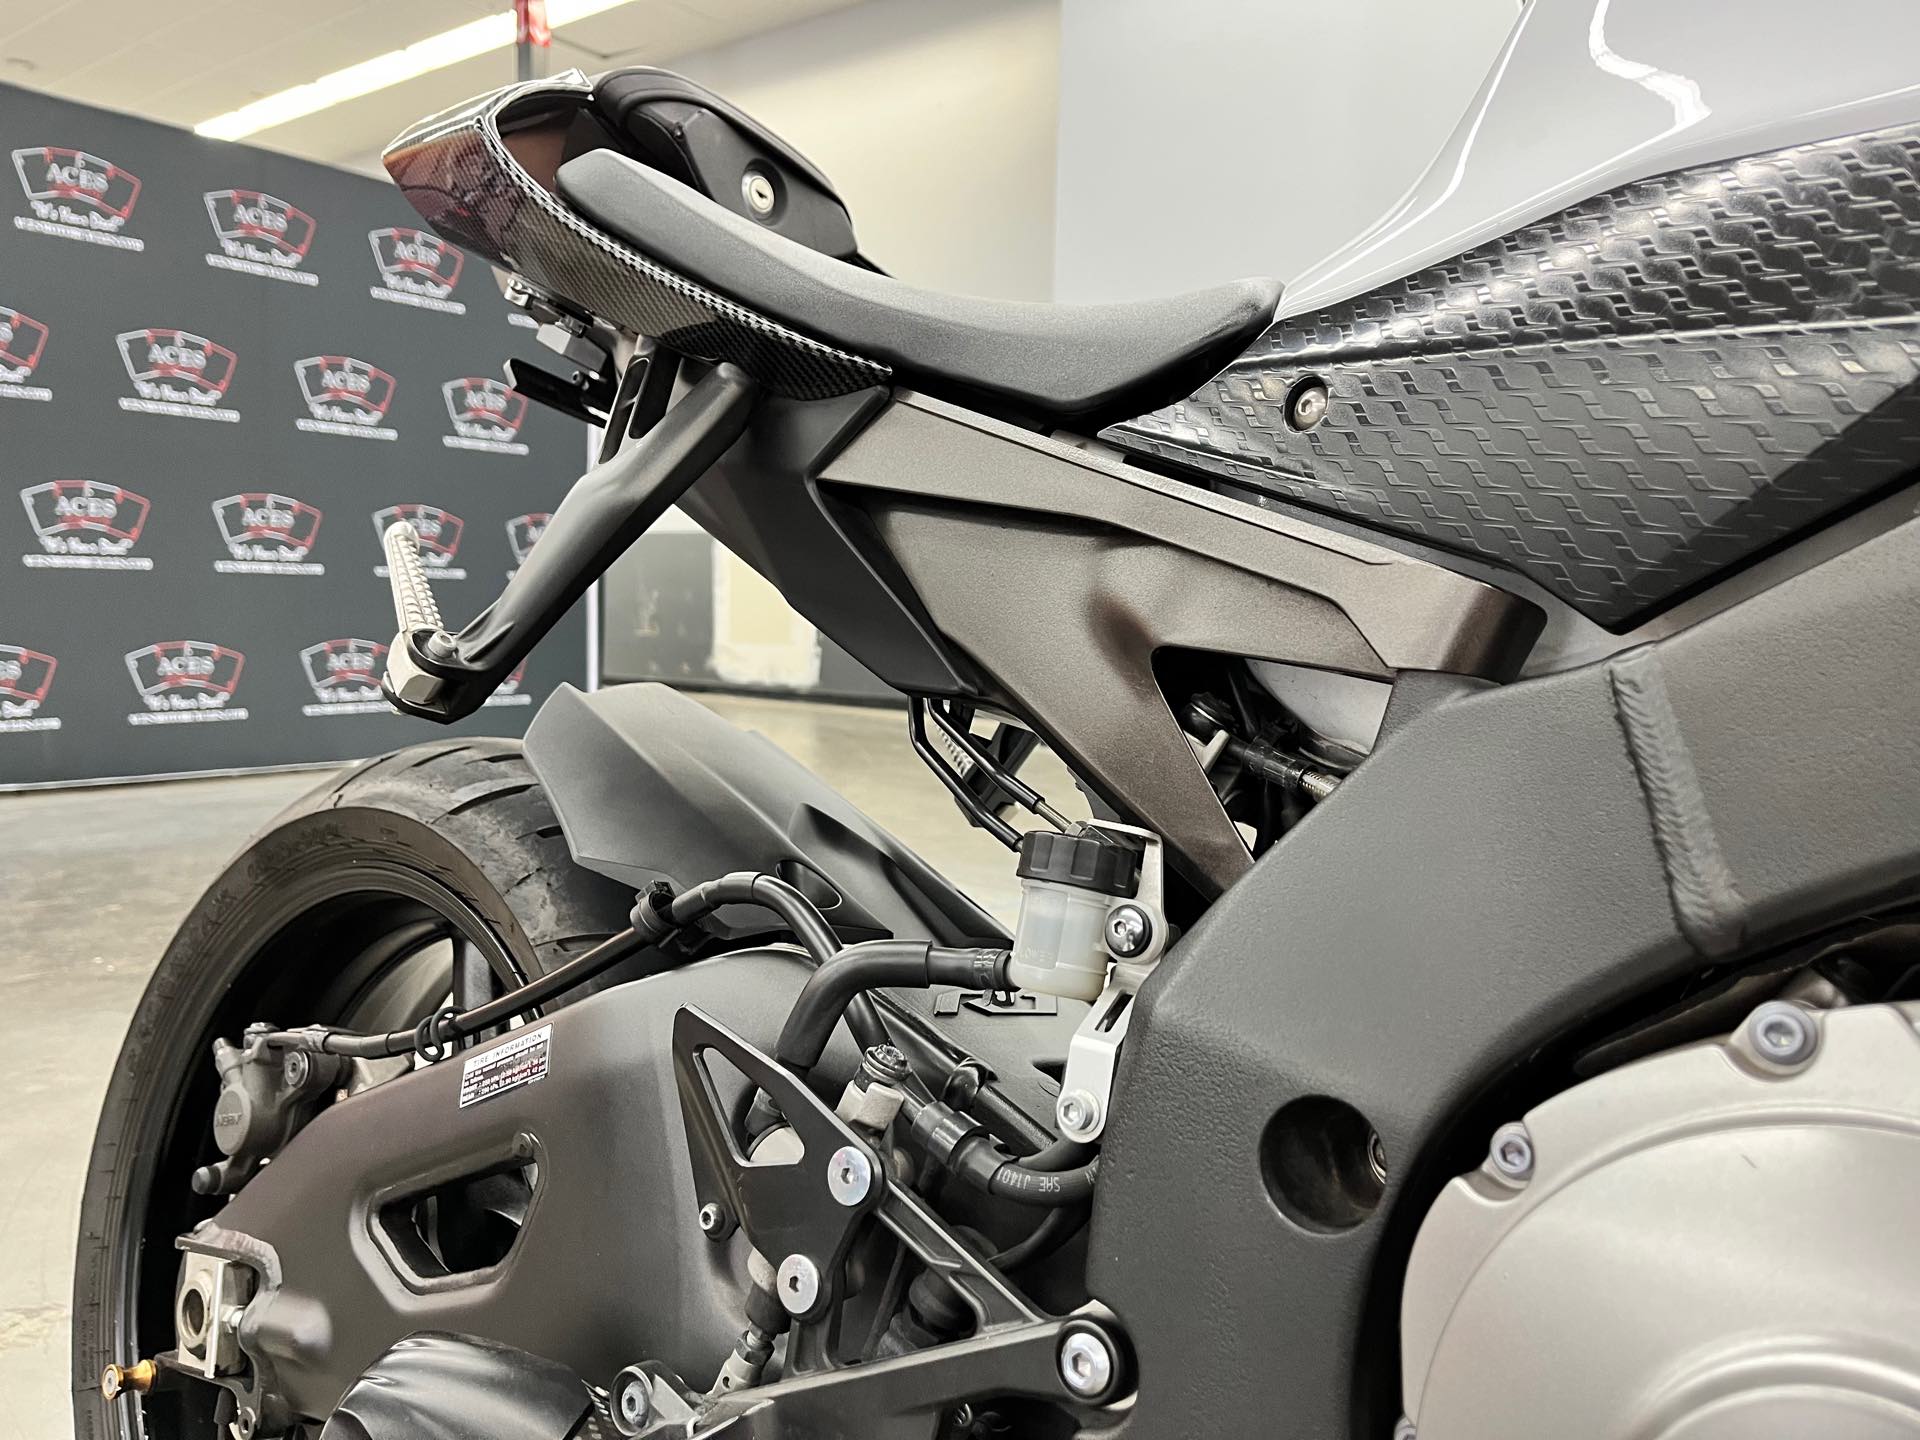 2016 Yamaha YZF R1S at Aces Motorcycles - Denver